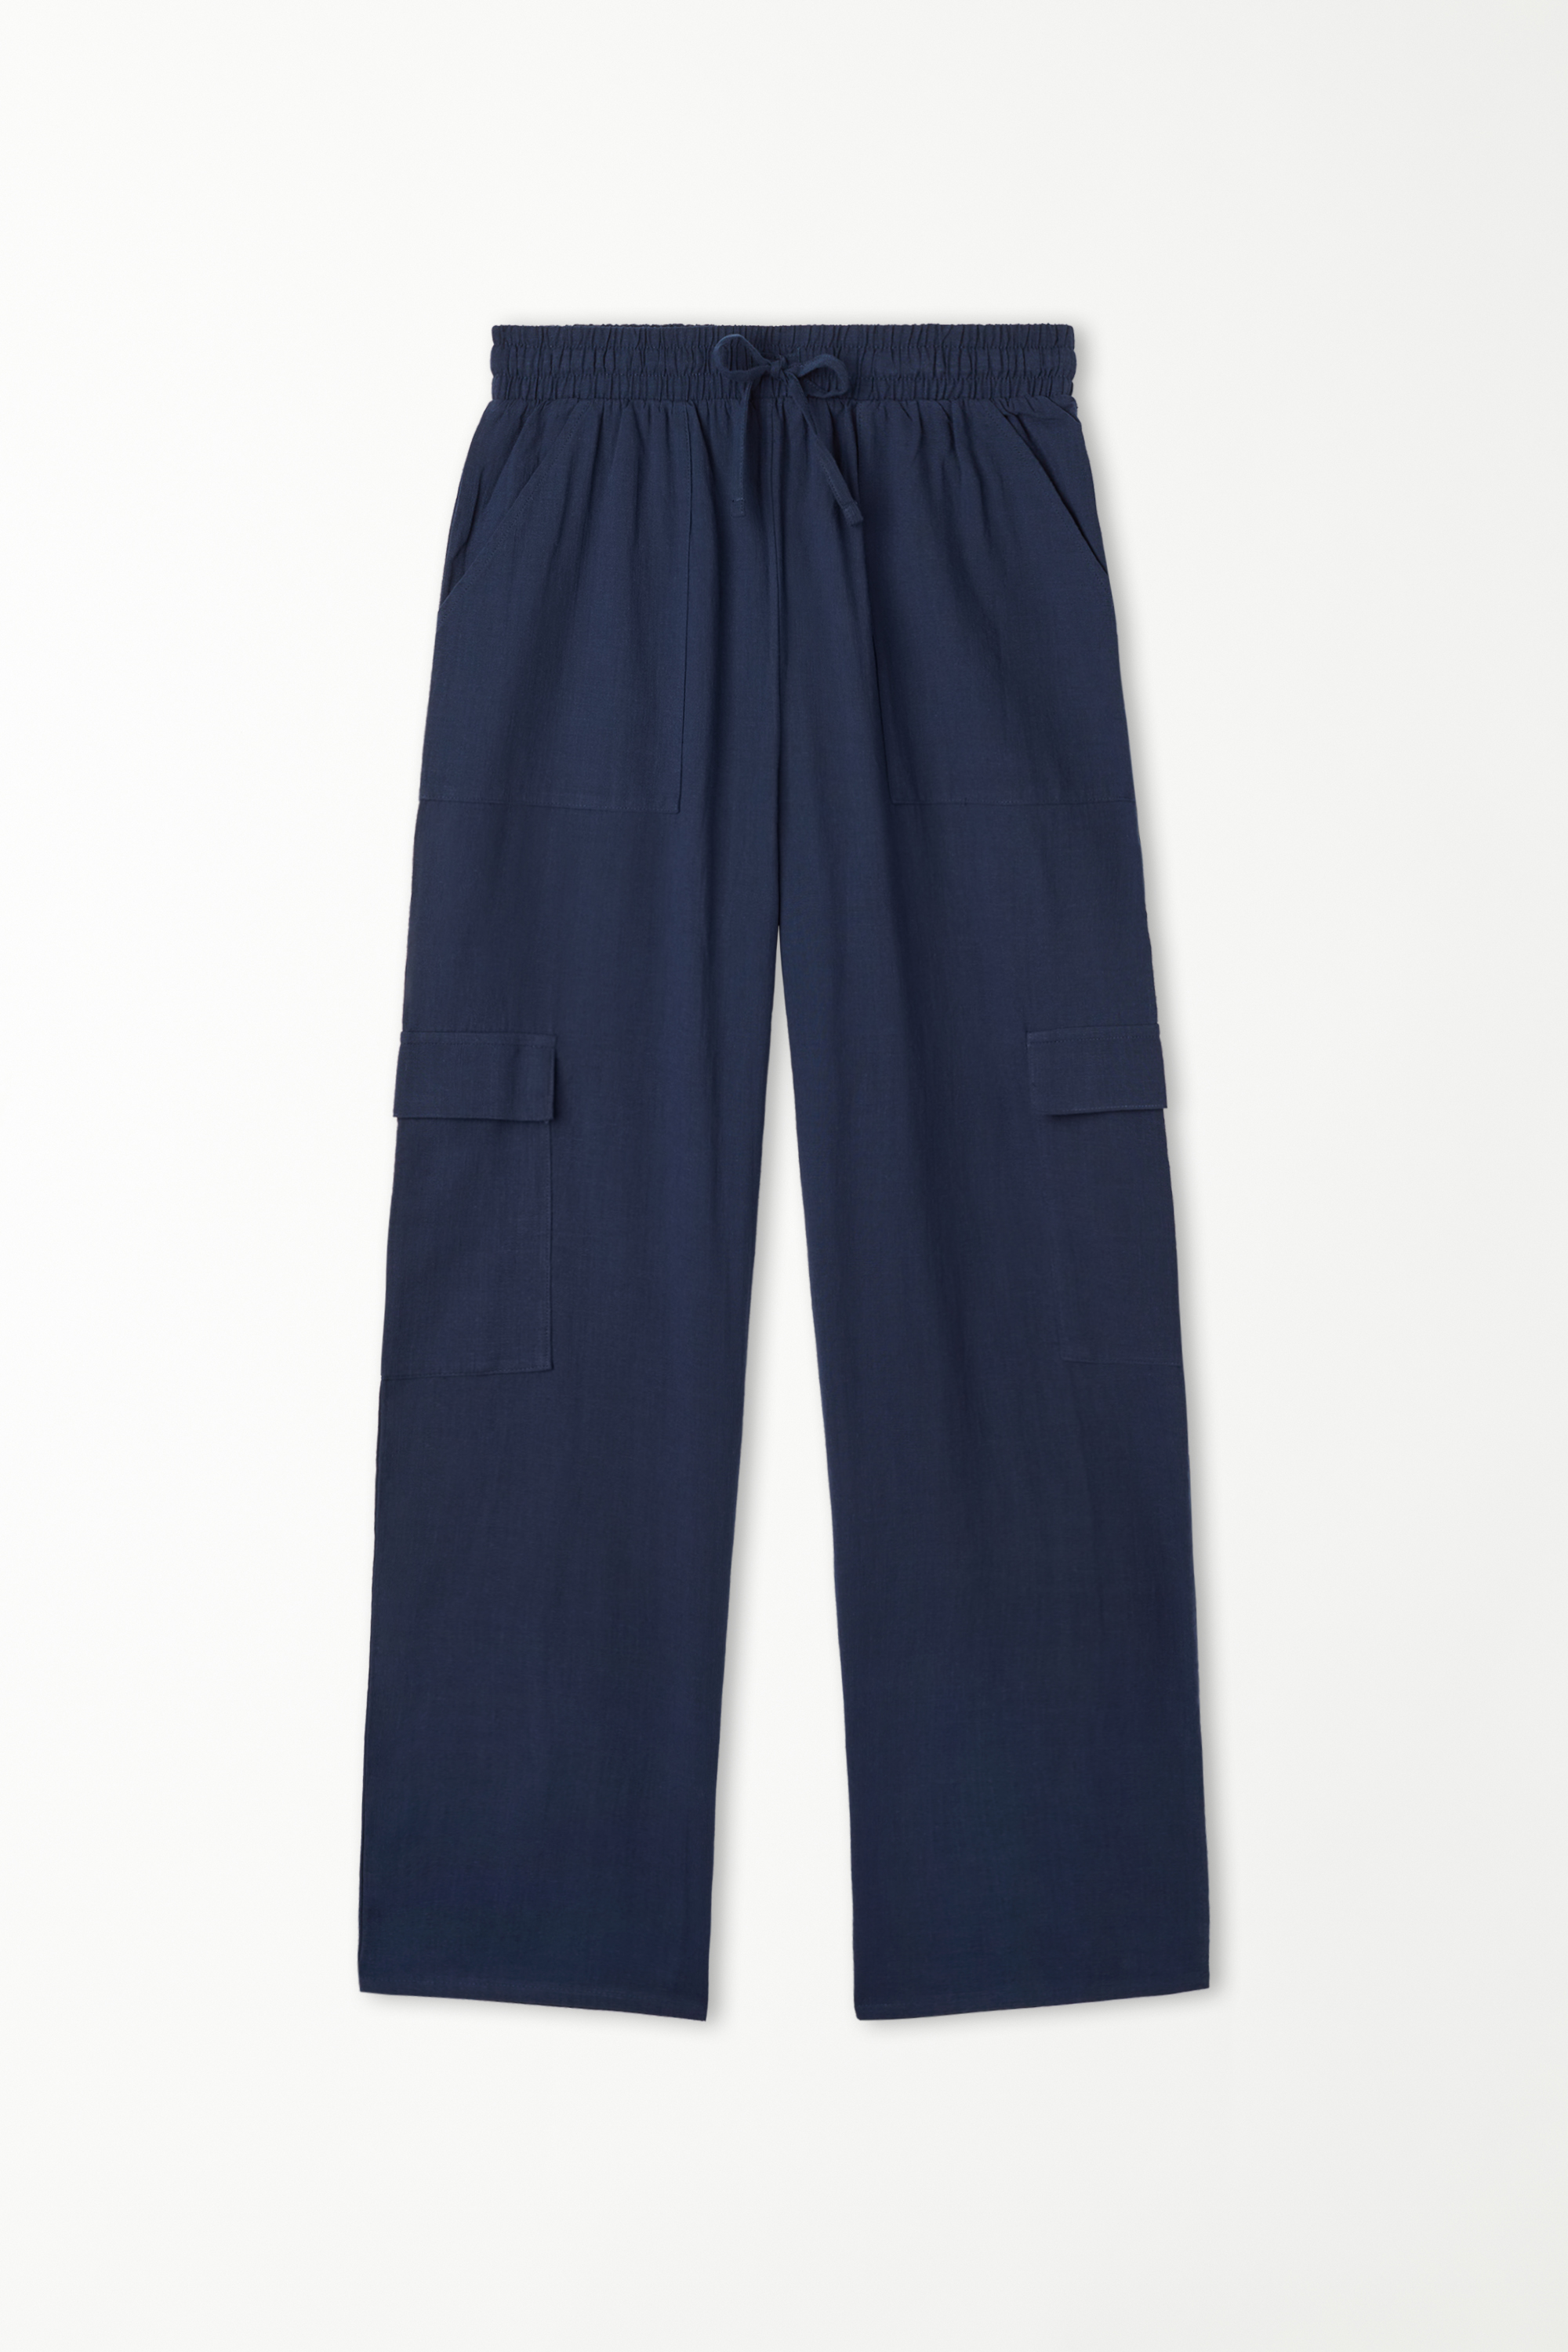 Pantaloni Lungi din Bumbac Super-Lejer 100% cu Buzunare Cargo